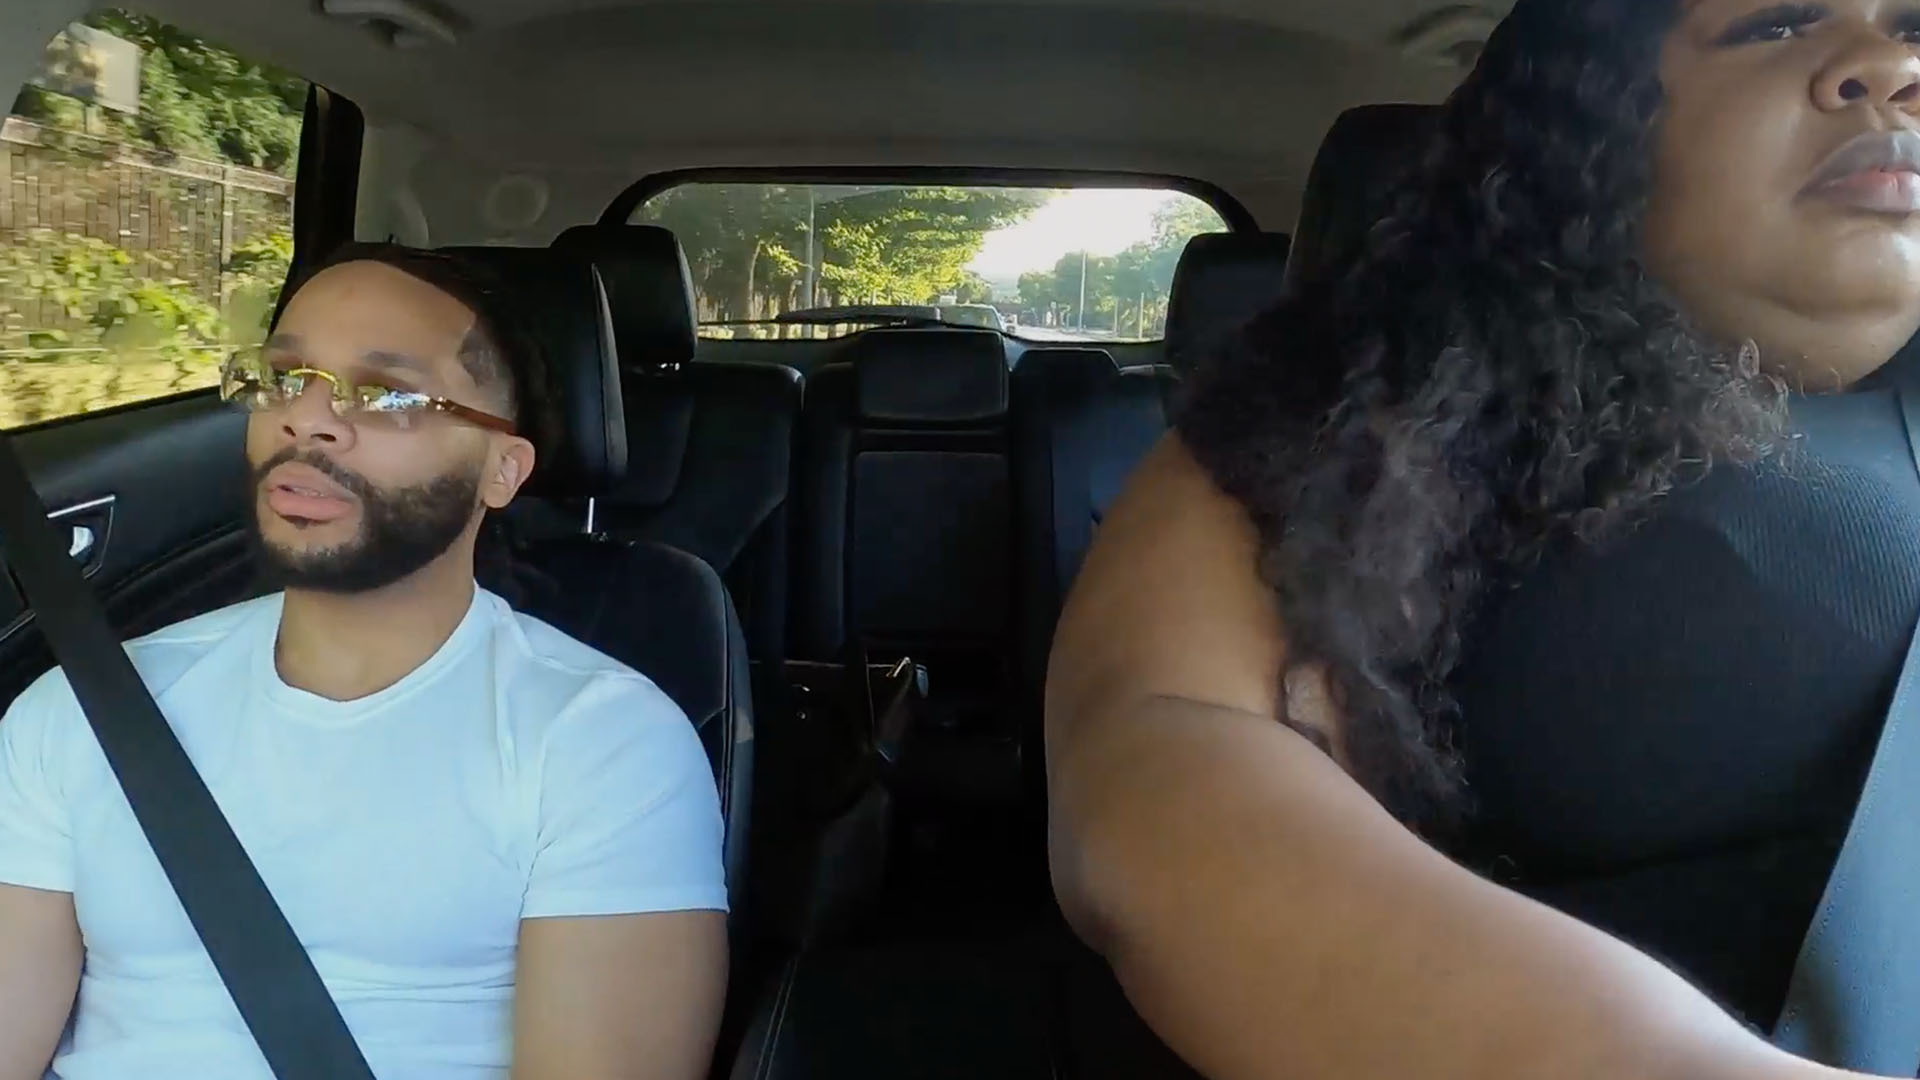 Watch Sneak Peek: Monique & Derek's Crazy Car Chase! | Love After Lockup Video Extras